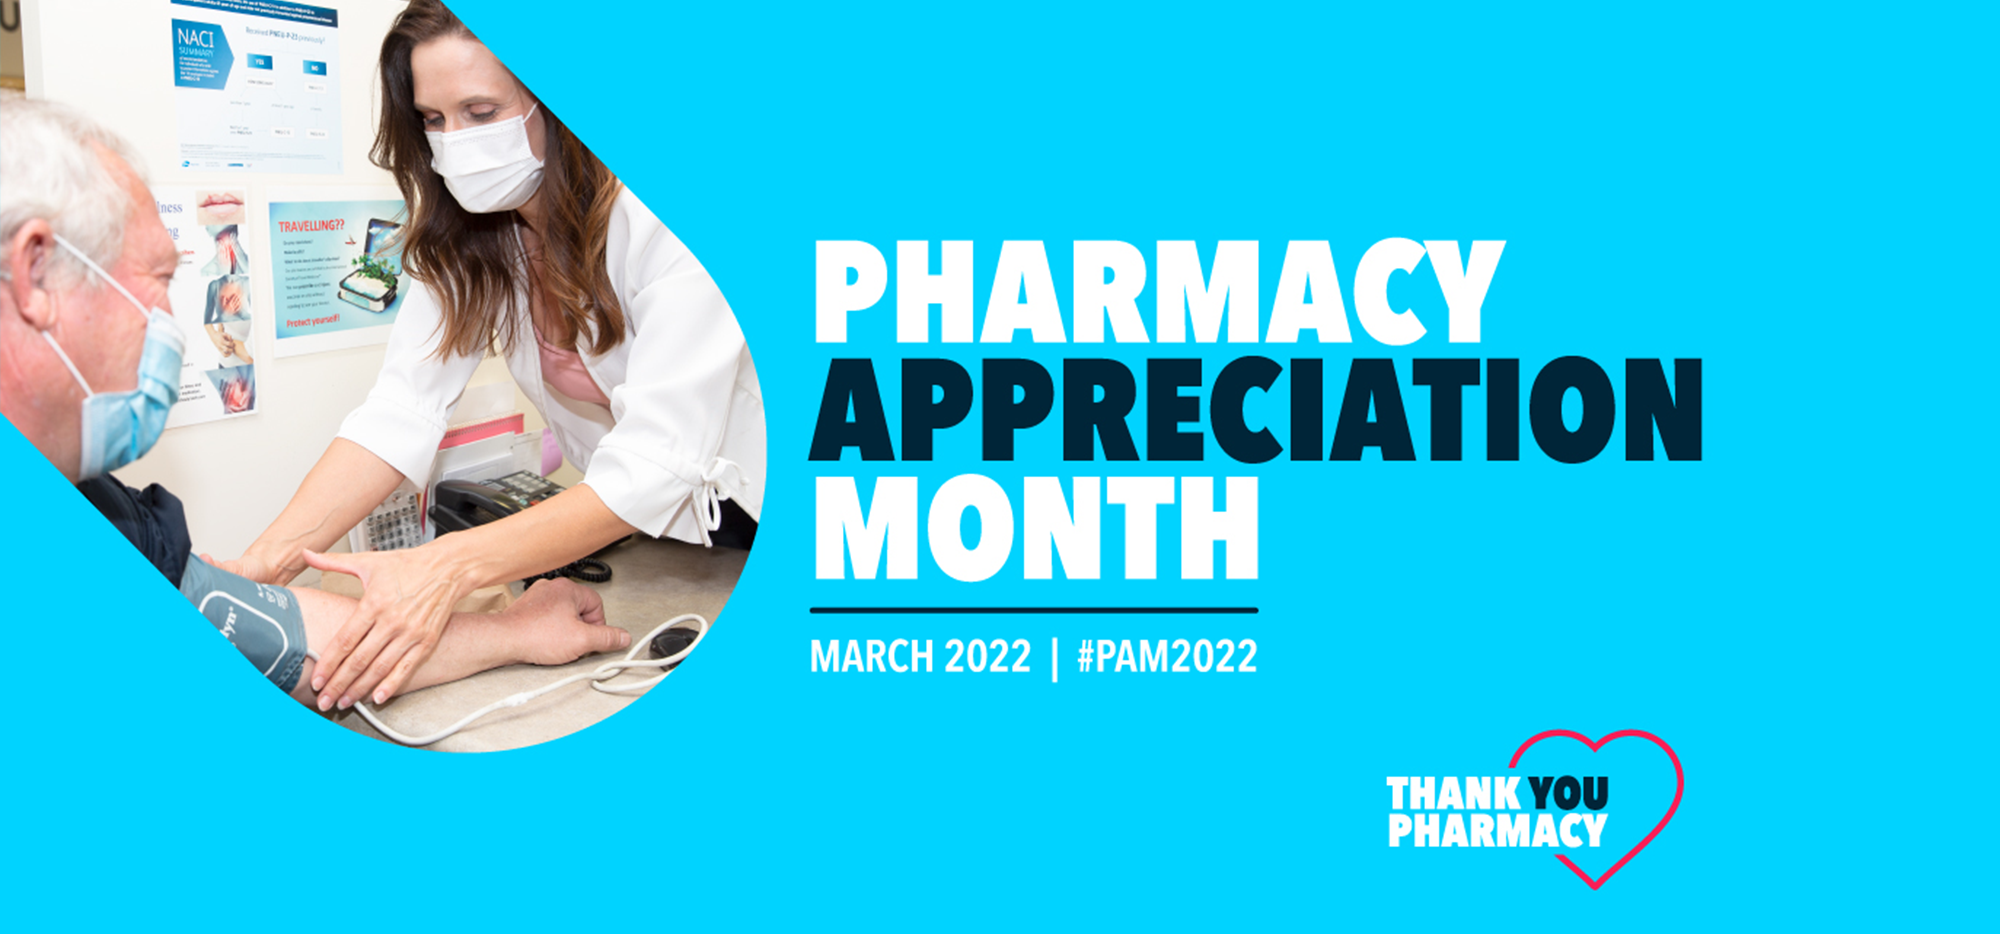 Pharmacy appreciation month